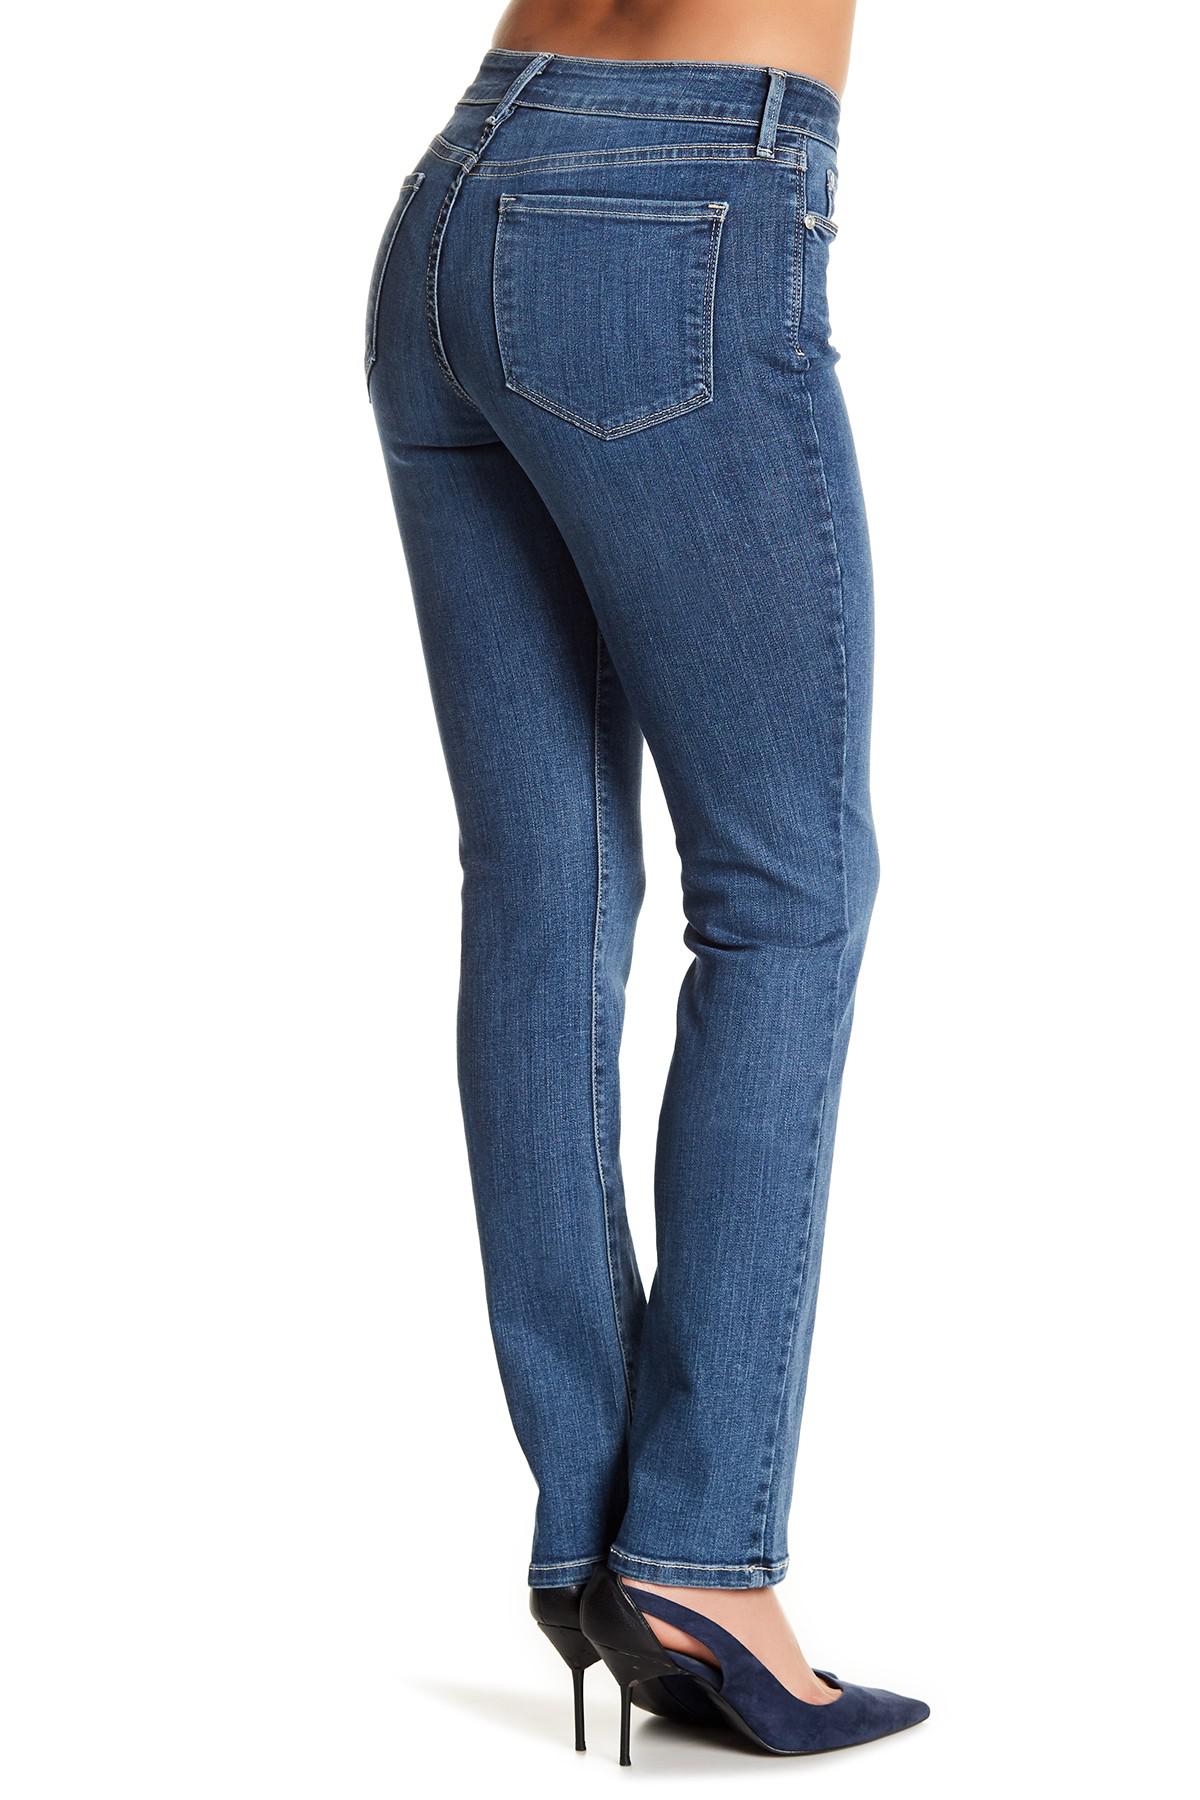 Lyst - Nydj Samantha Slim Fit Jeans in Blue